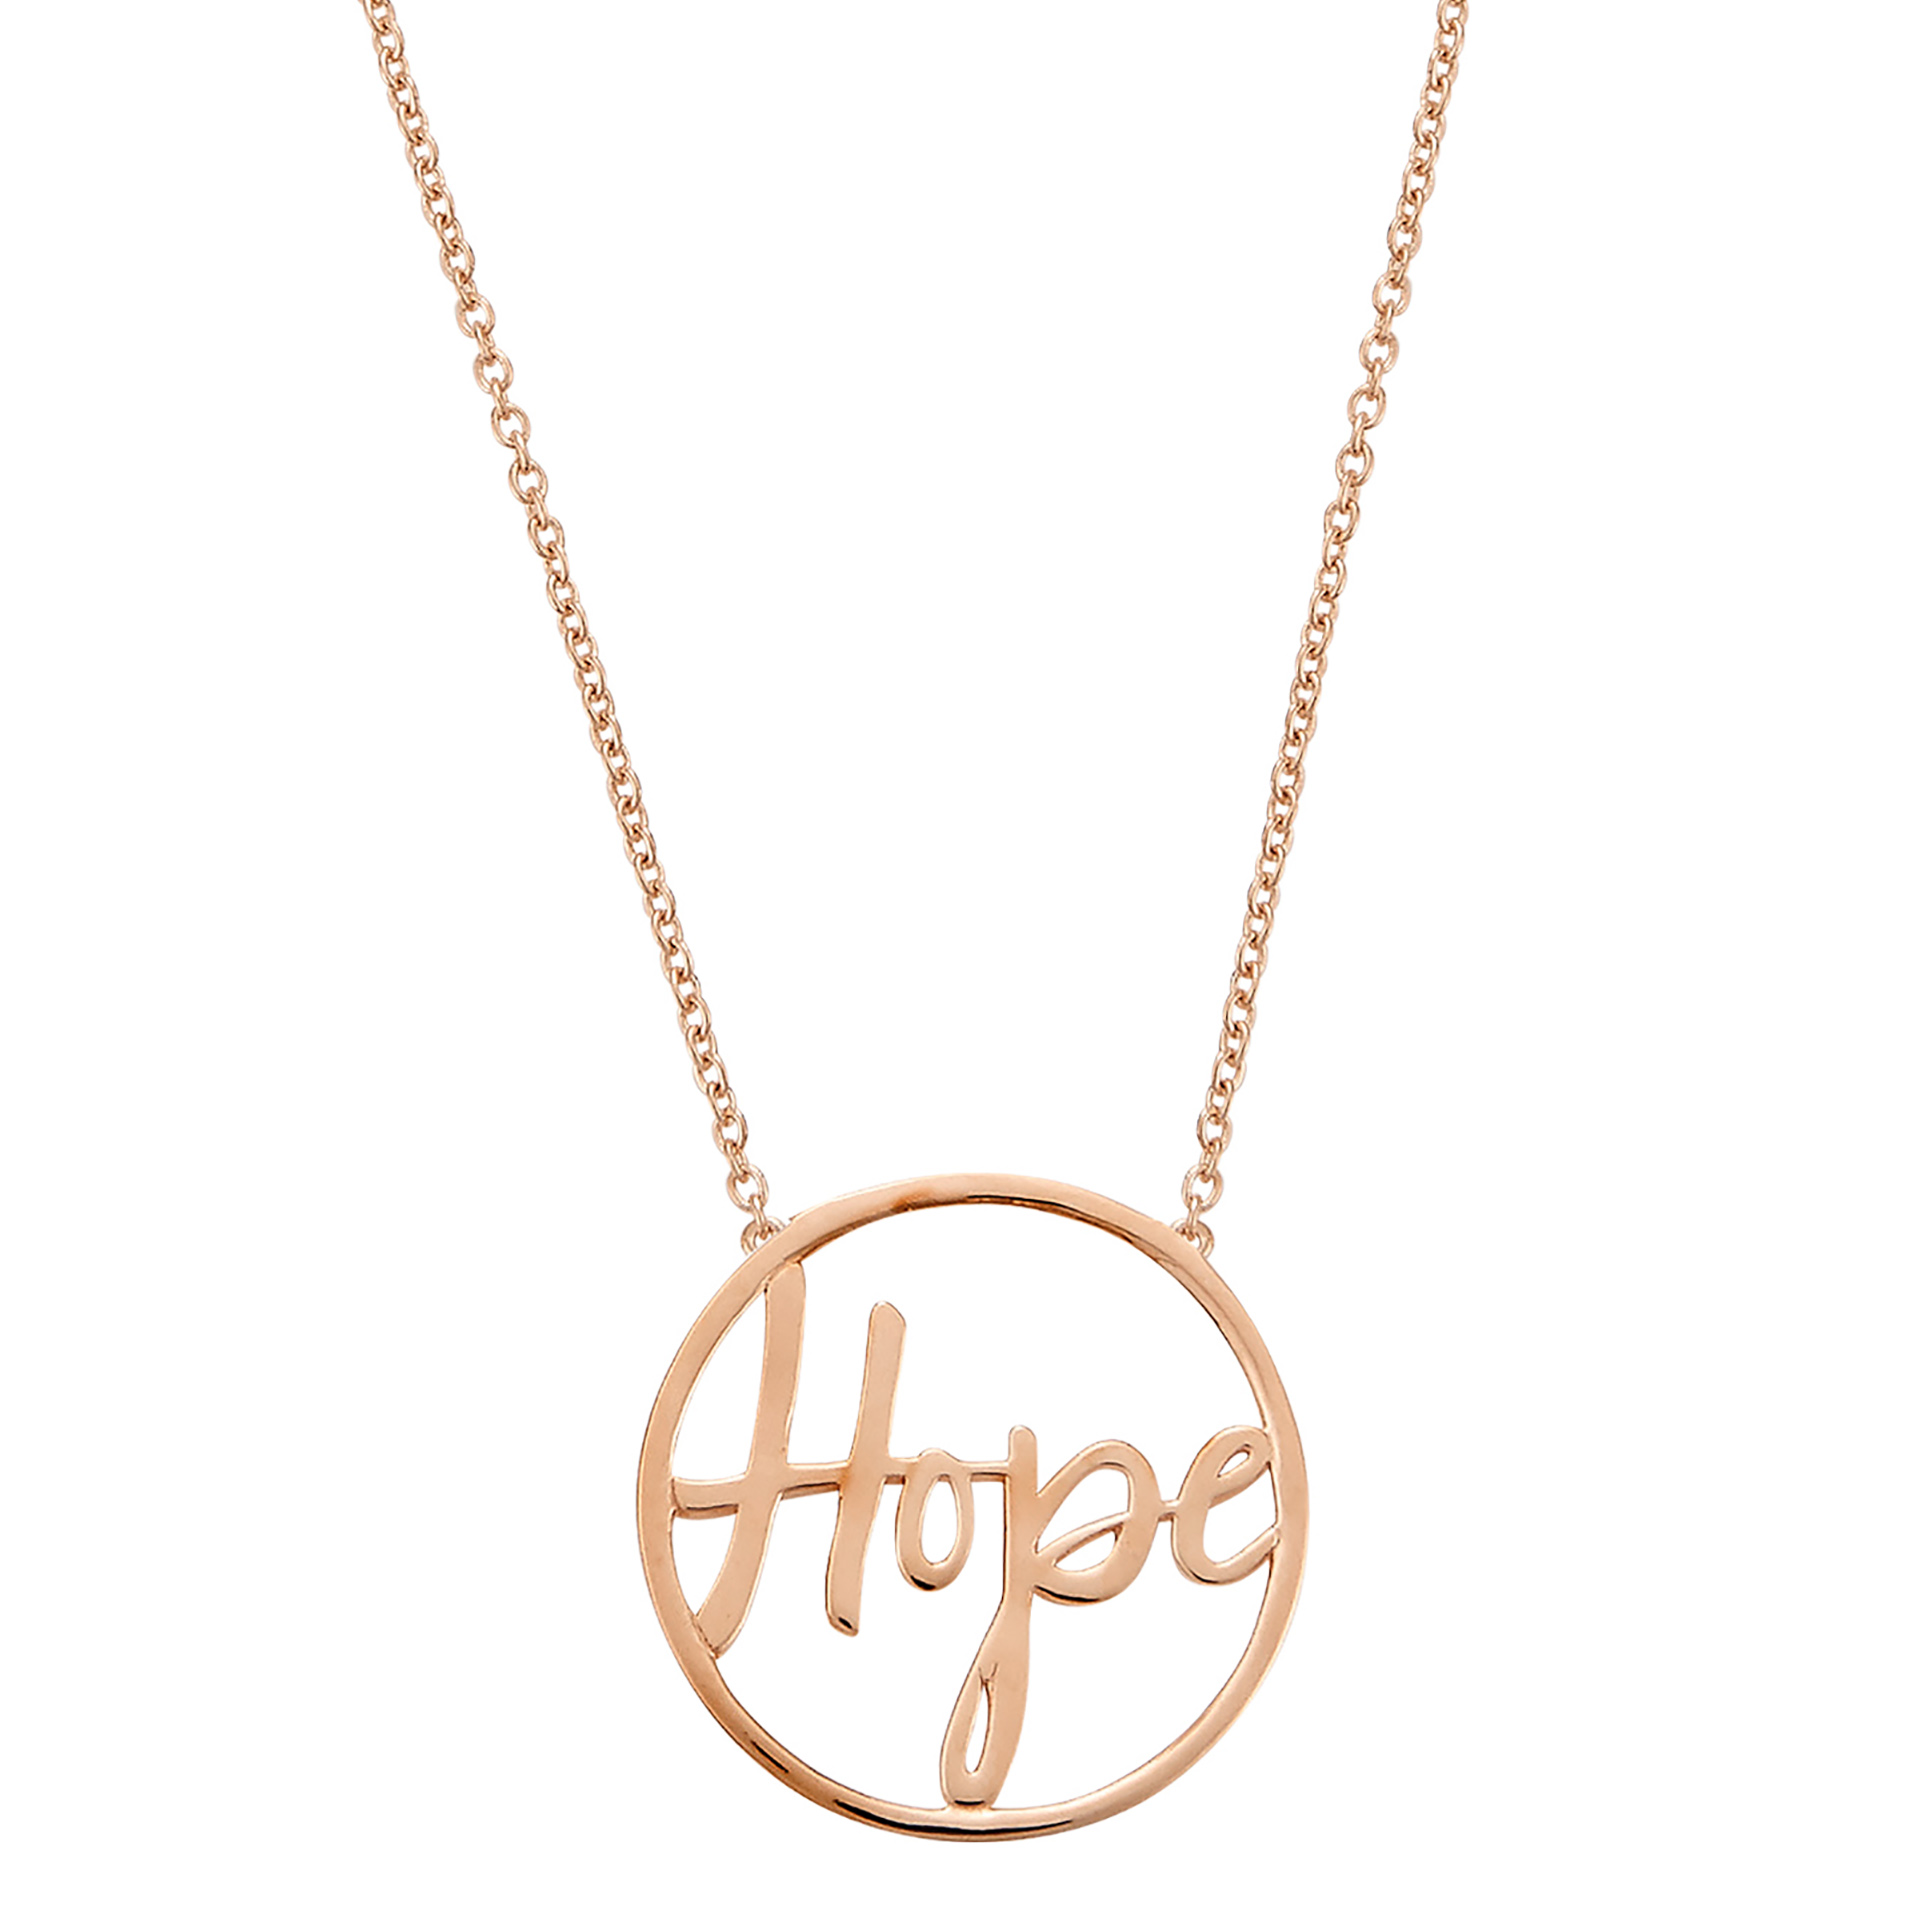 Hope necklace harry porter